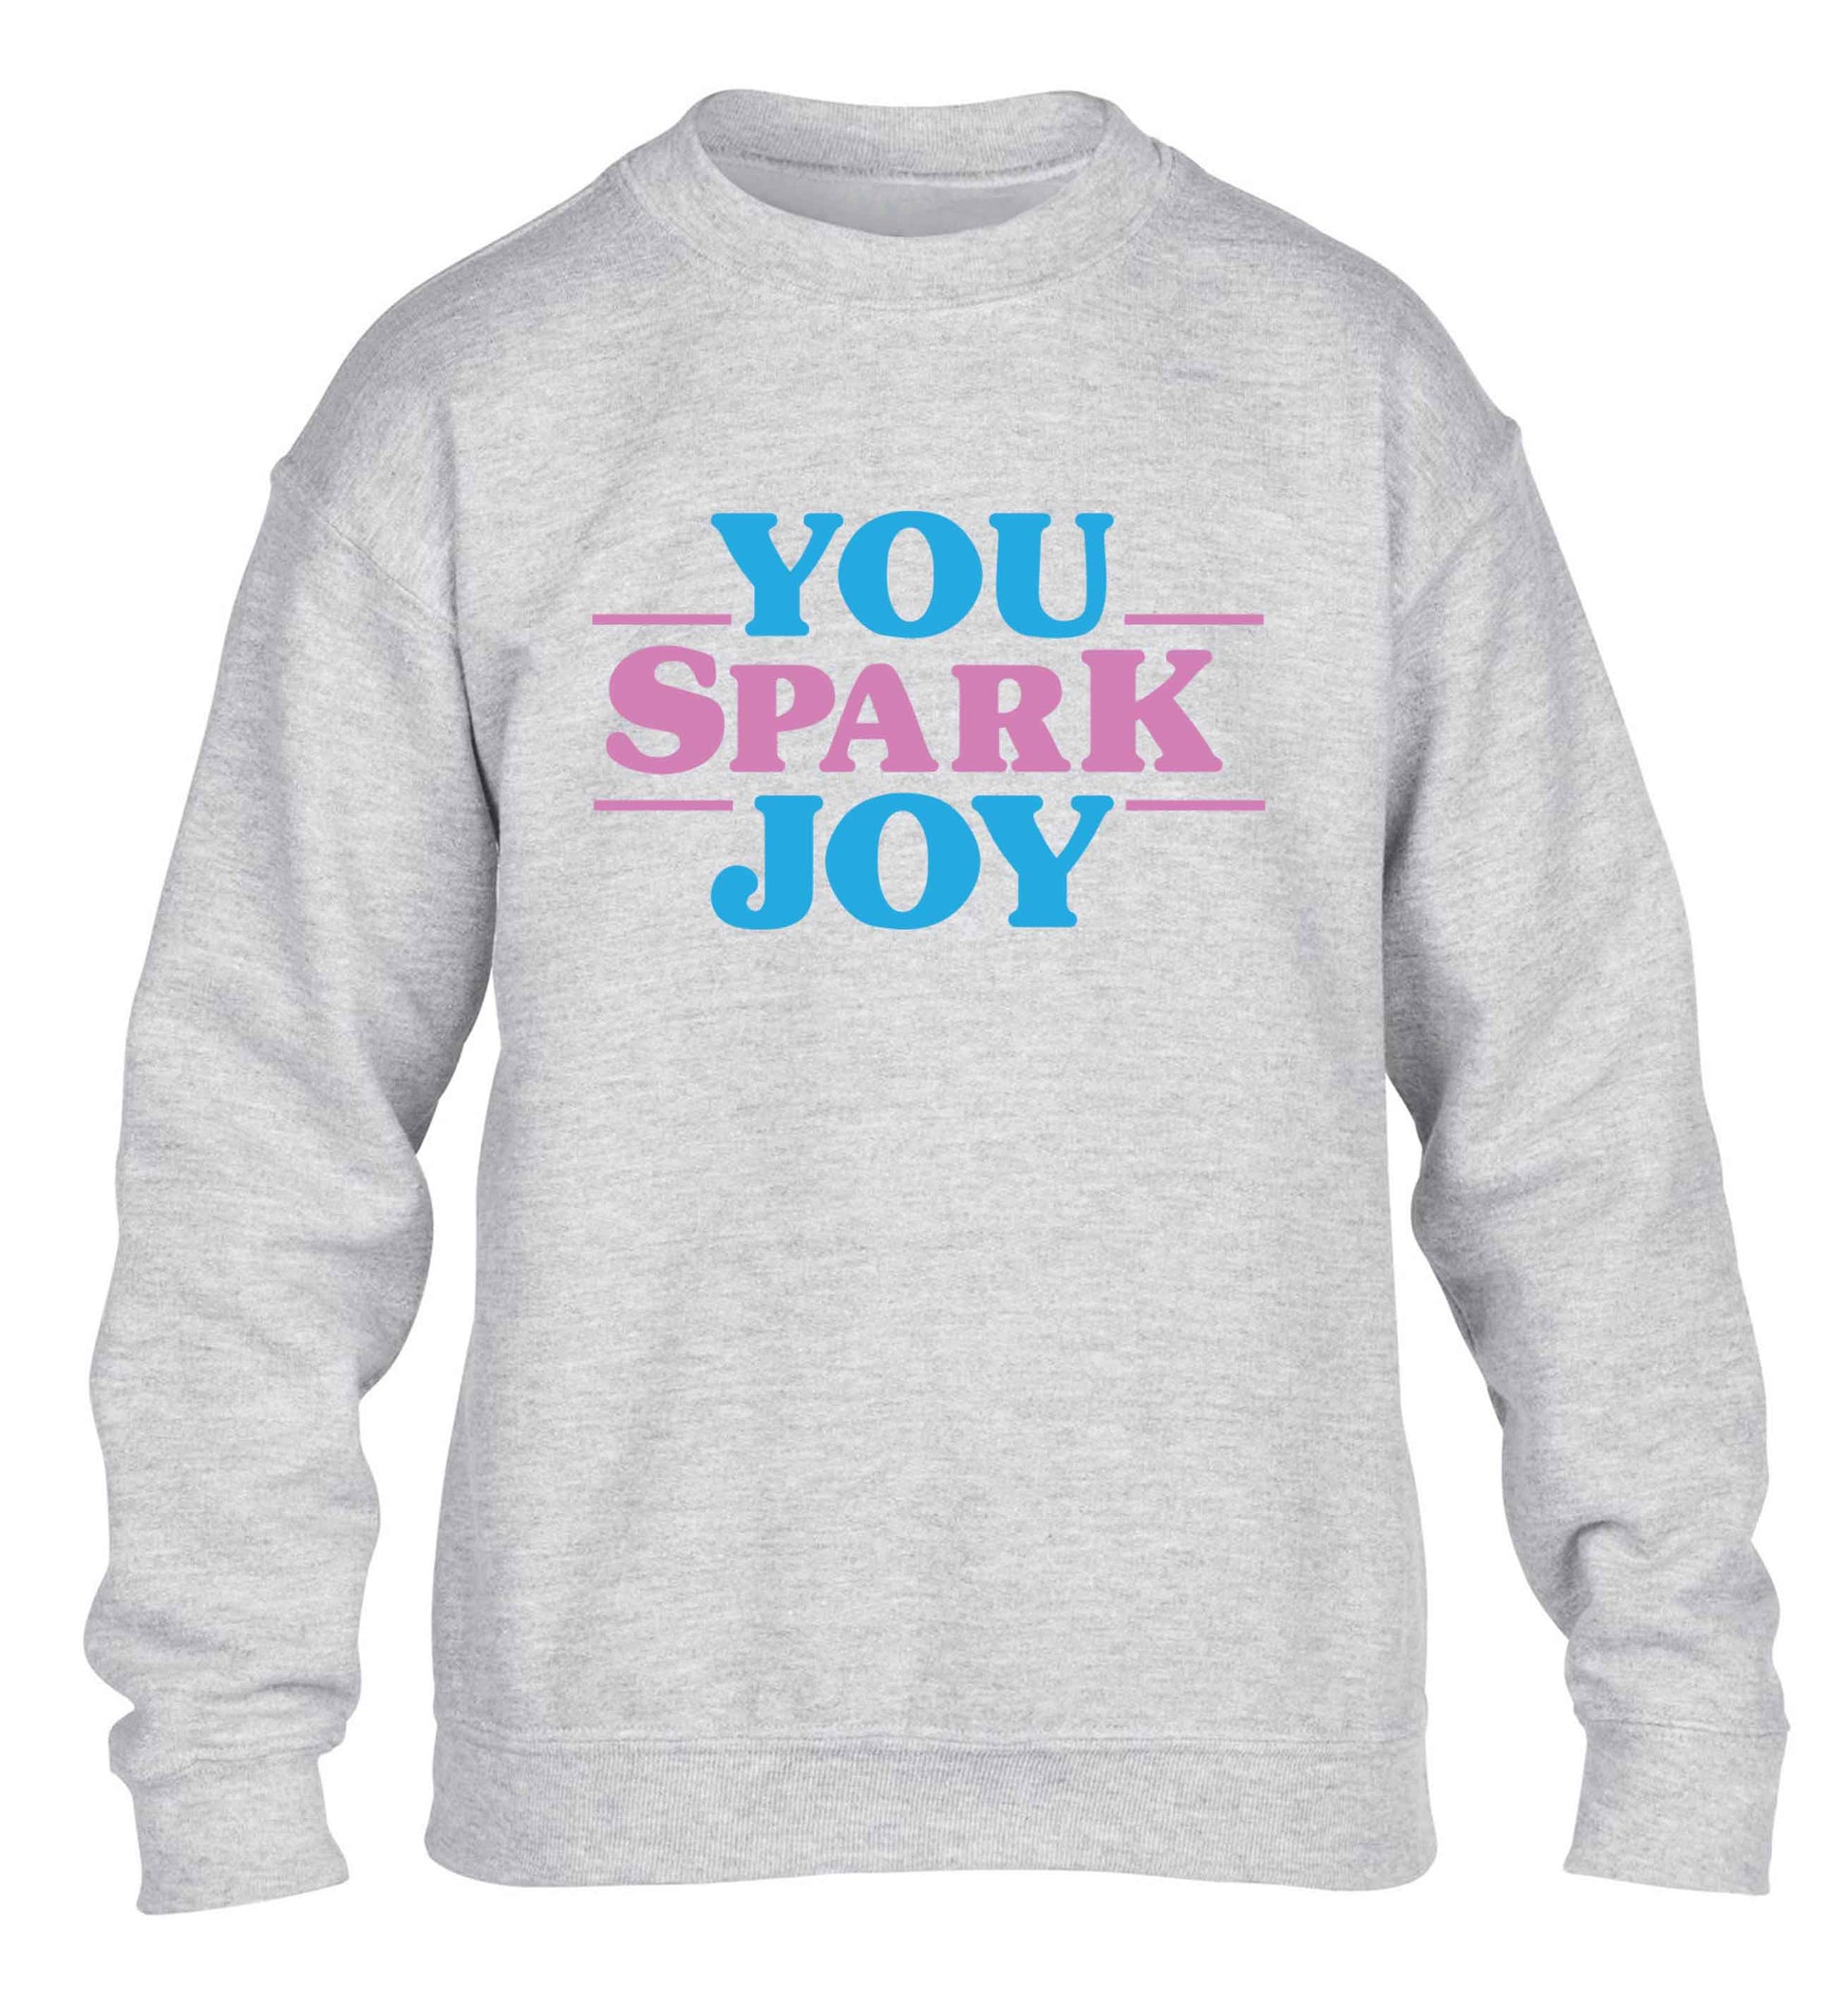 You spark joy children's grey sweater 12-13 Years